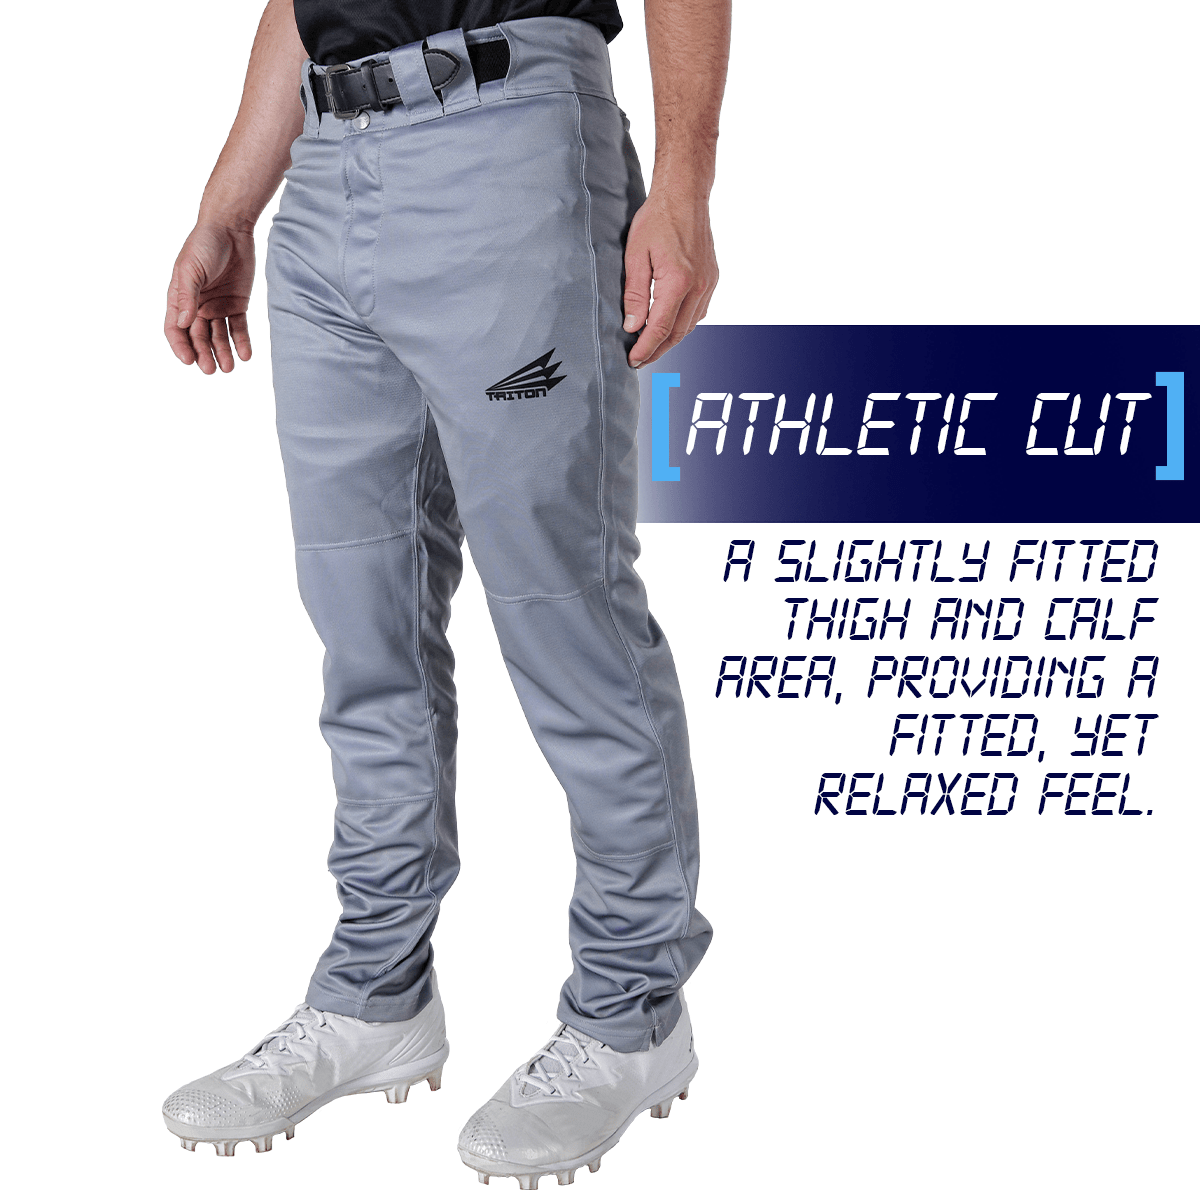 Triton Elite Athletic Cut Baseball Pant (Gray)